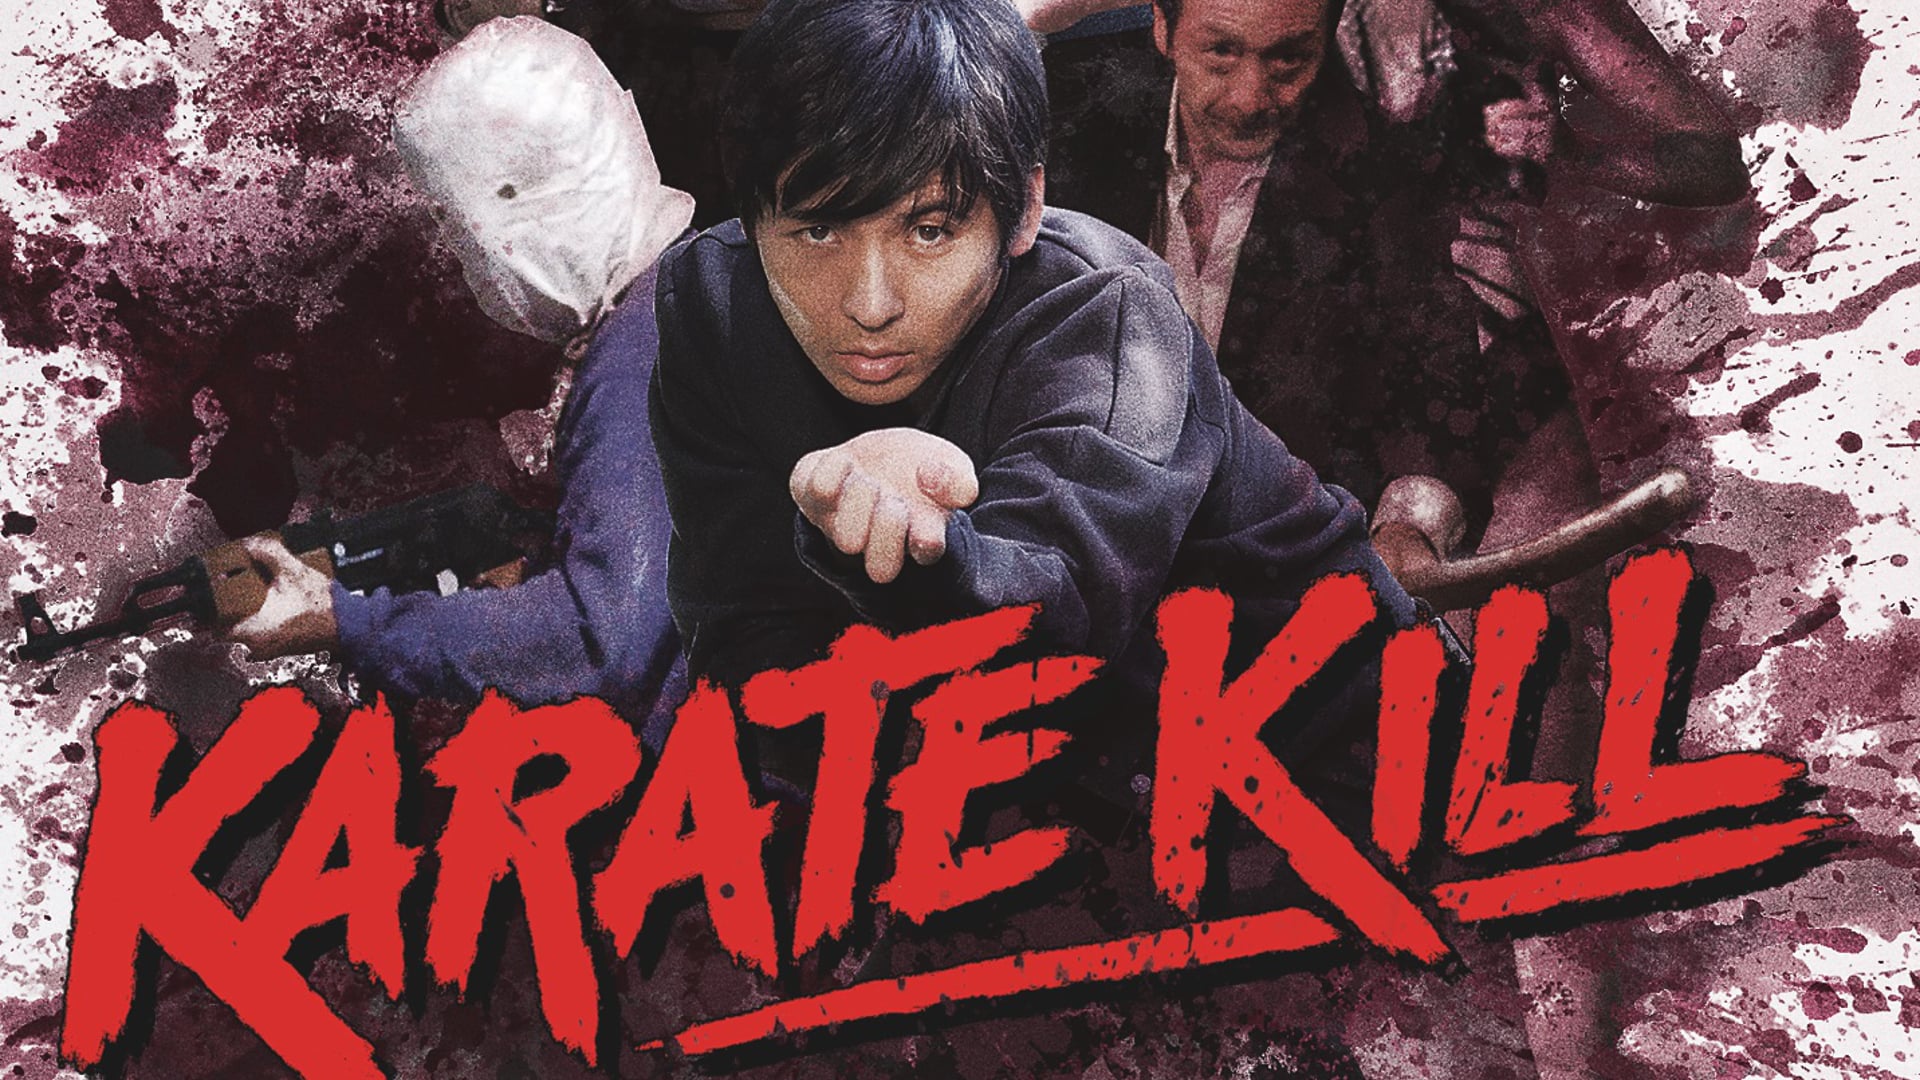 Karate Kill: Official Trailer